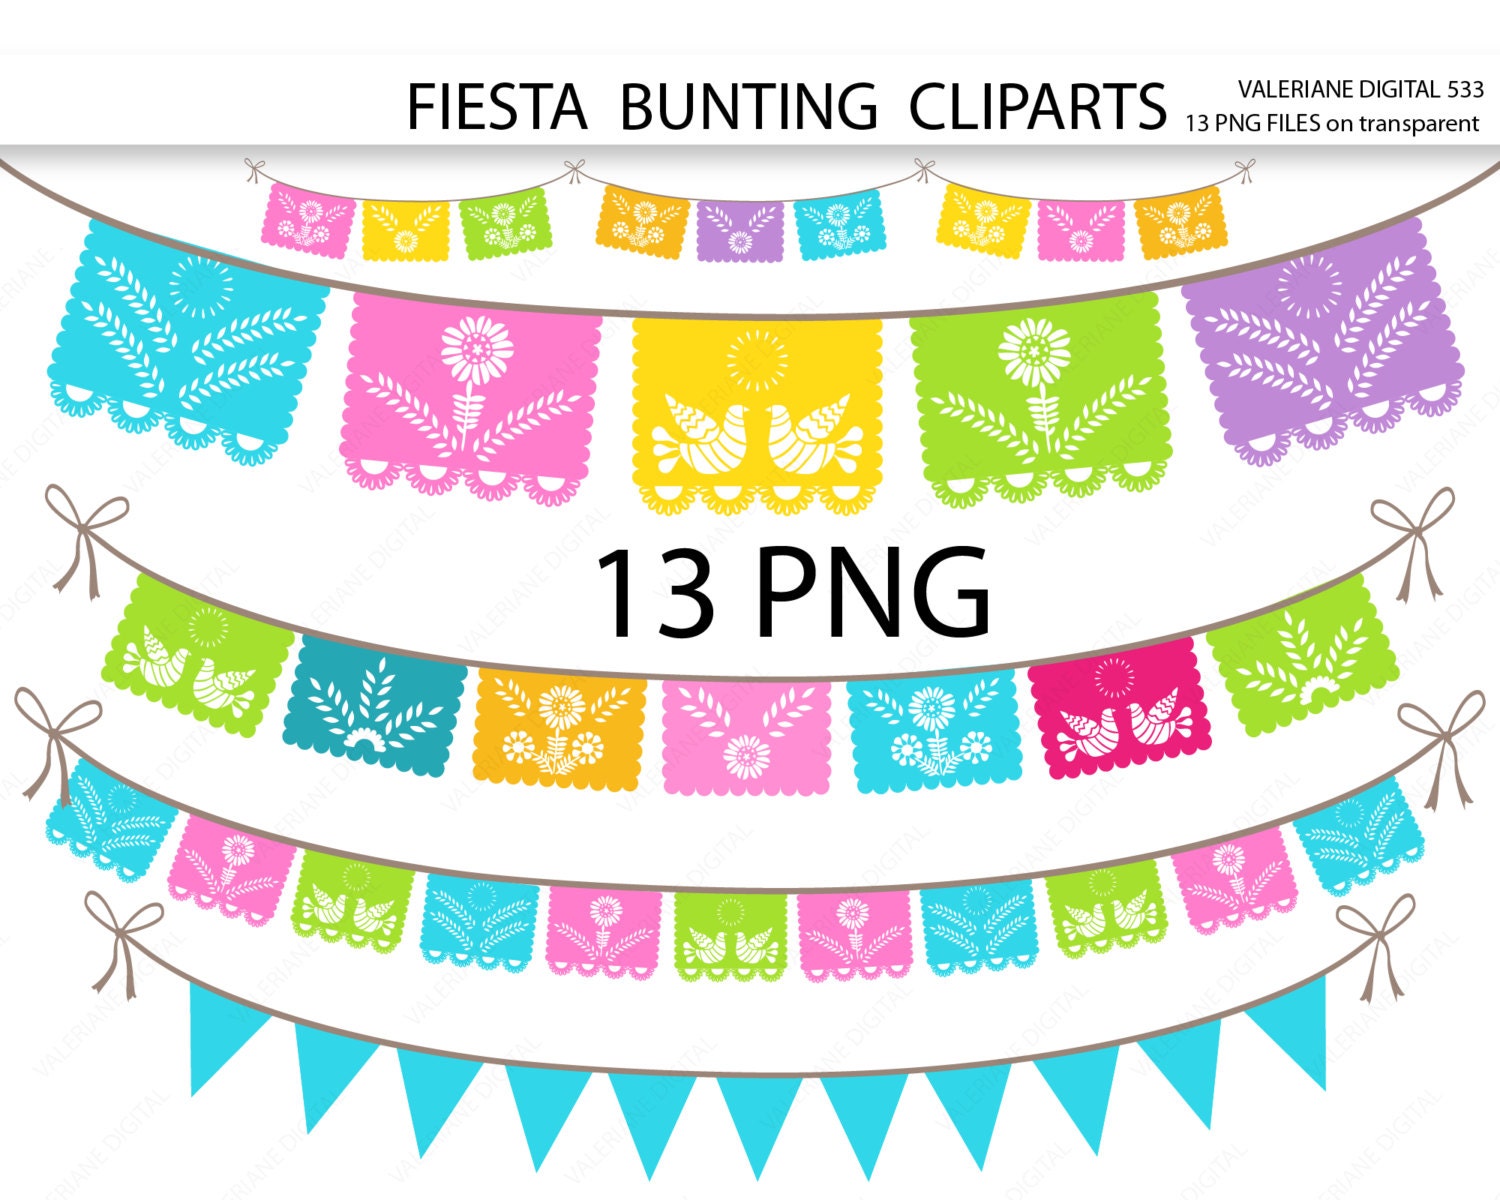 Fiesta Digital bunting clipart mexican clip art clipart for